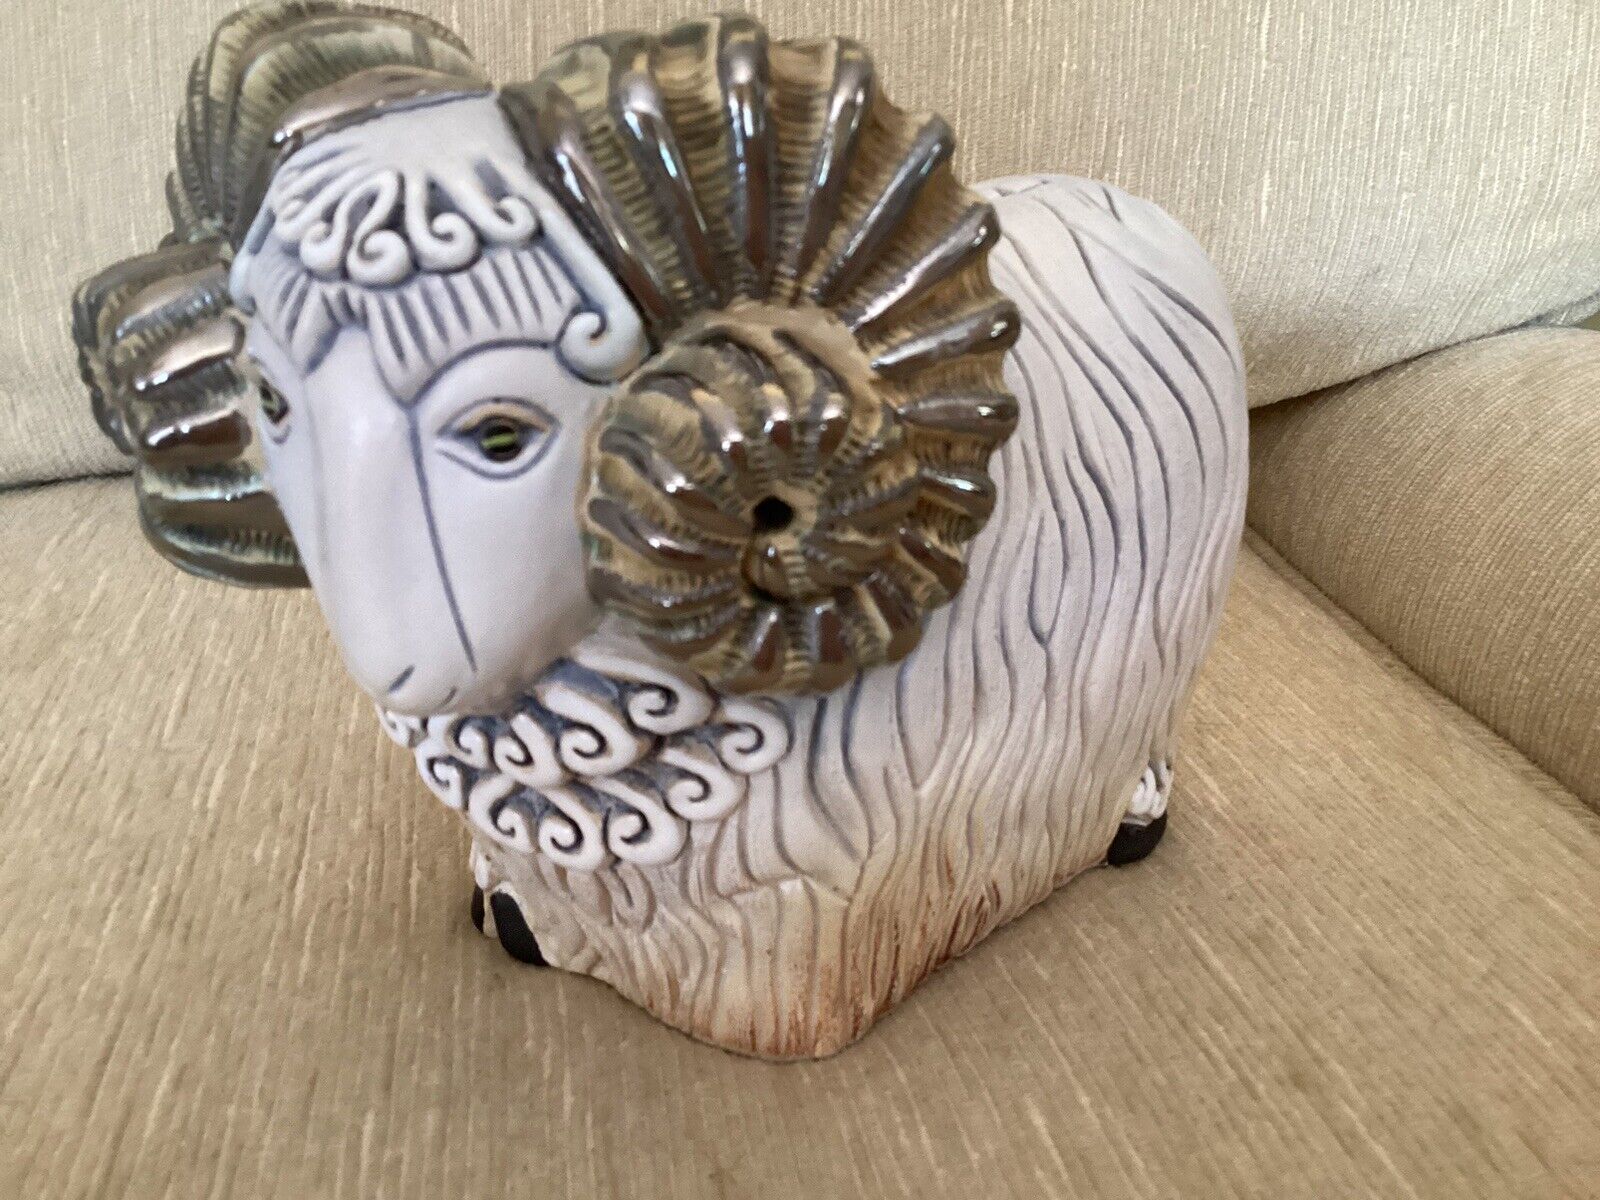 Artesiania Rinconada “Ram”, #415, Large Ram, White With Silver And Beige Horns